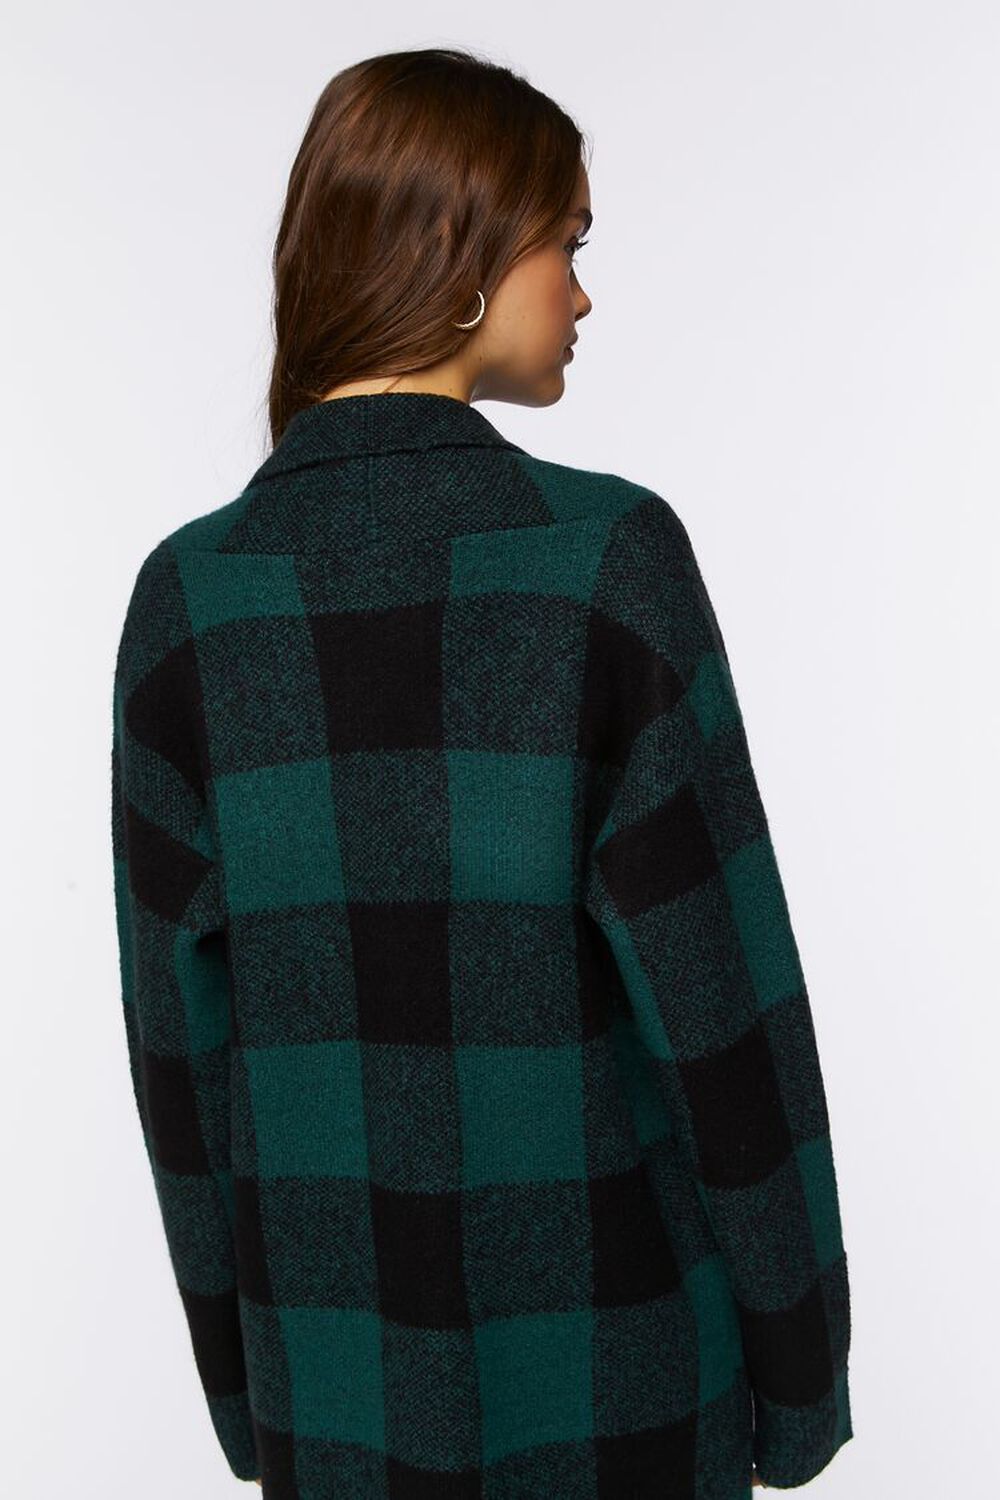 HUNTER GREEN/BLACK Buffalo Plaid Longline Cardigan Sweater, image 3